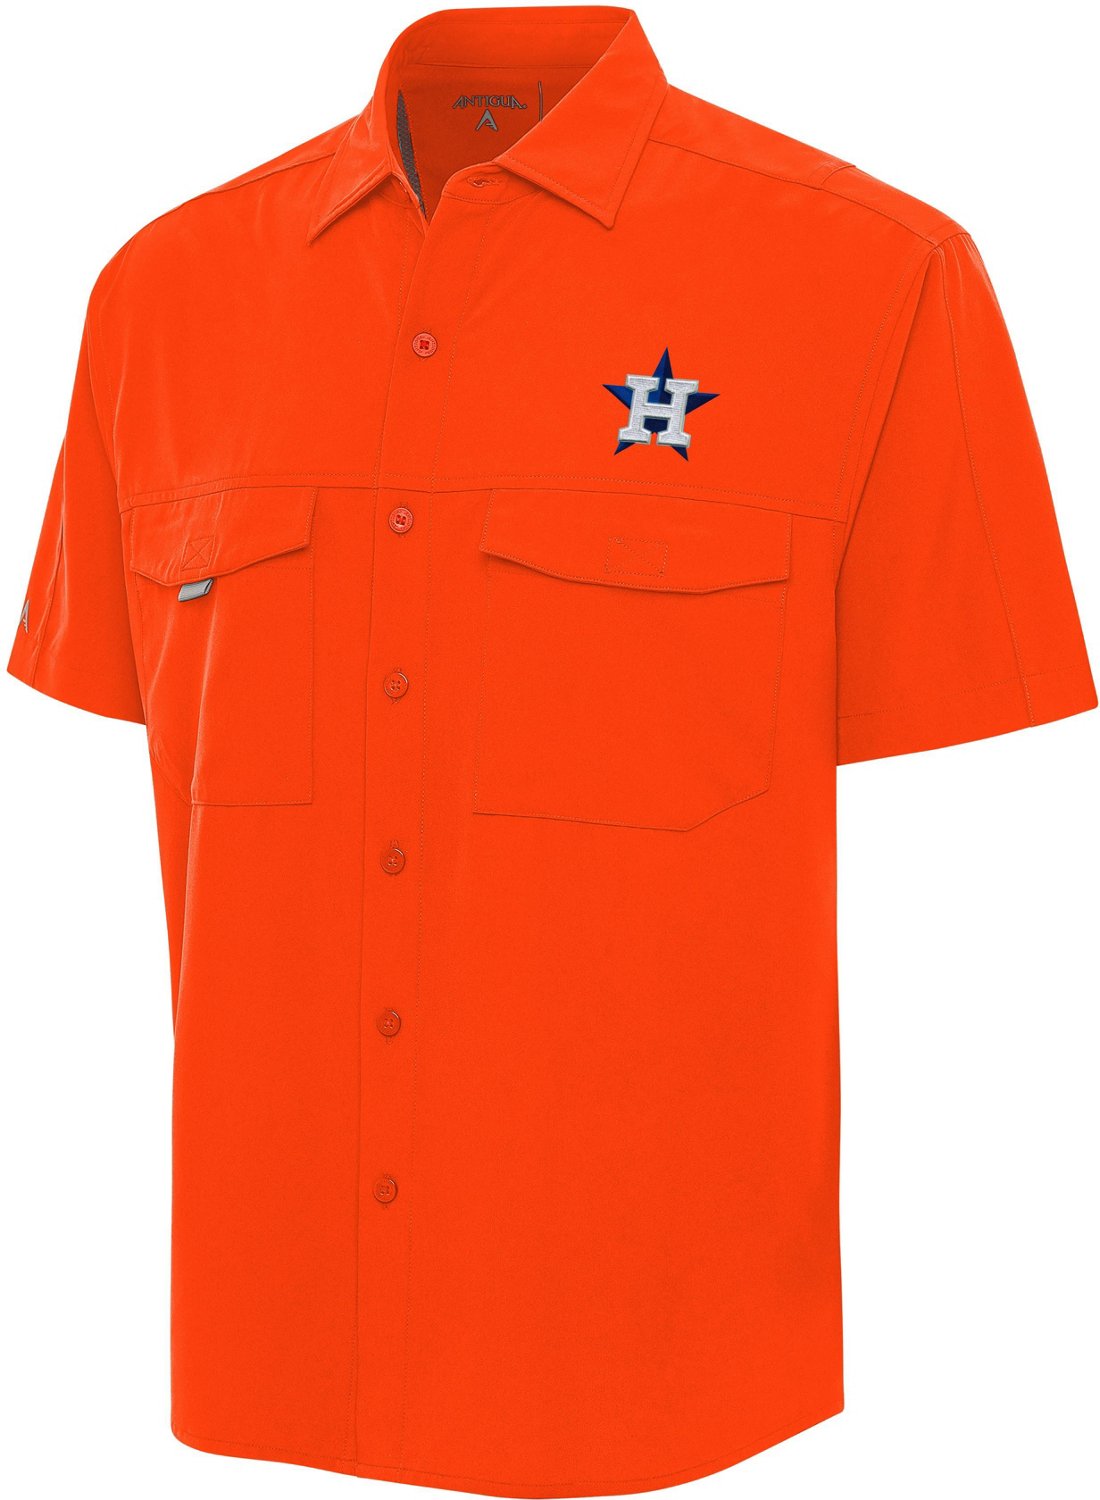 Antigua Men's Texas Rangers Game Day Woven Fishing Shirt